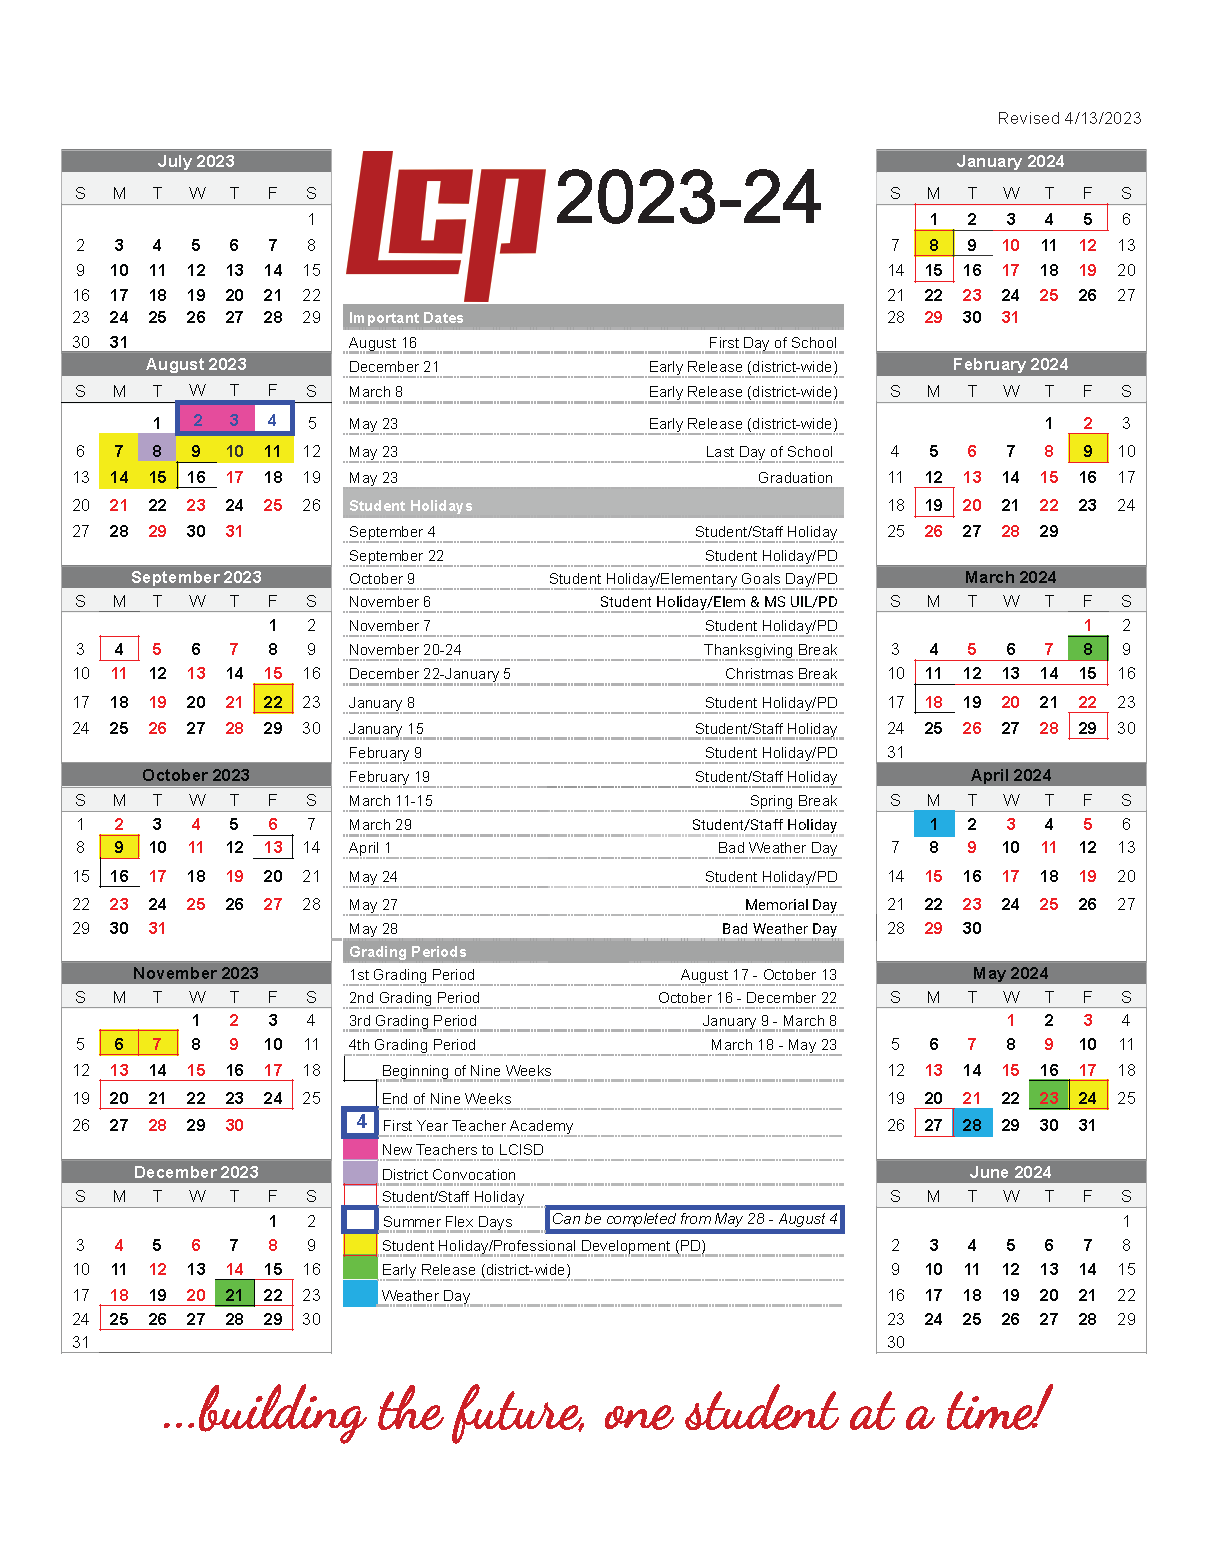 master calendar 2023-24